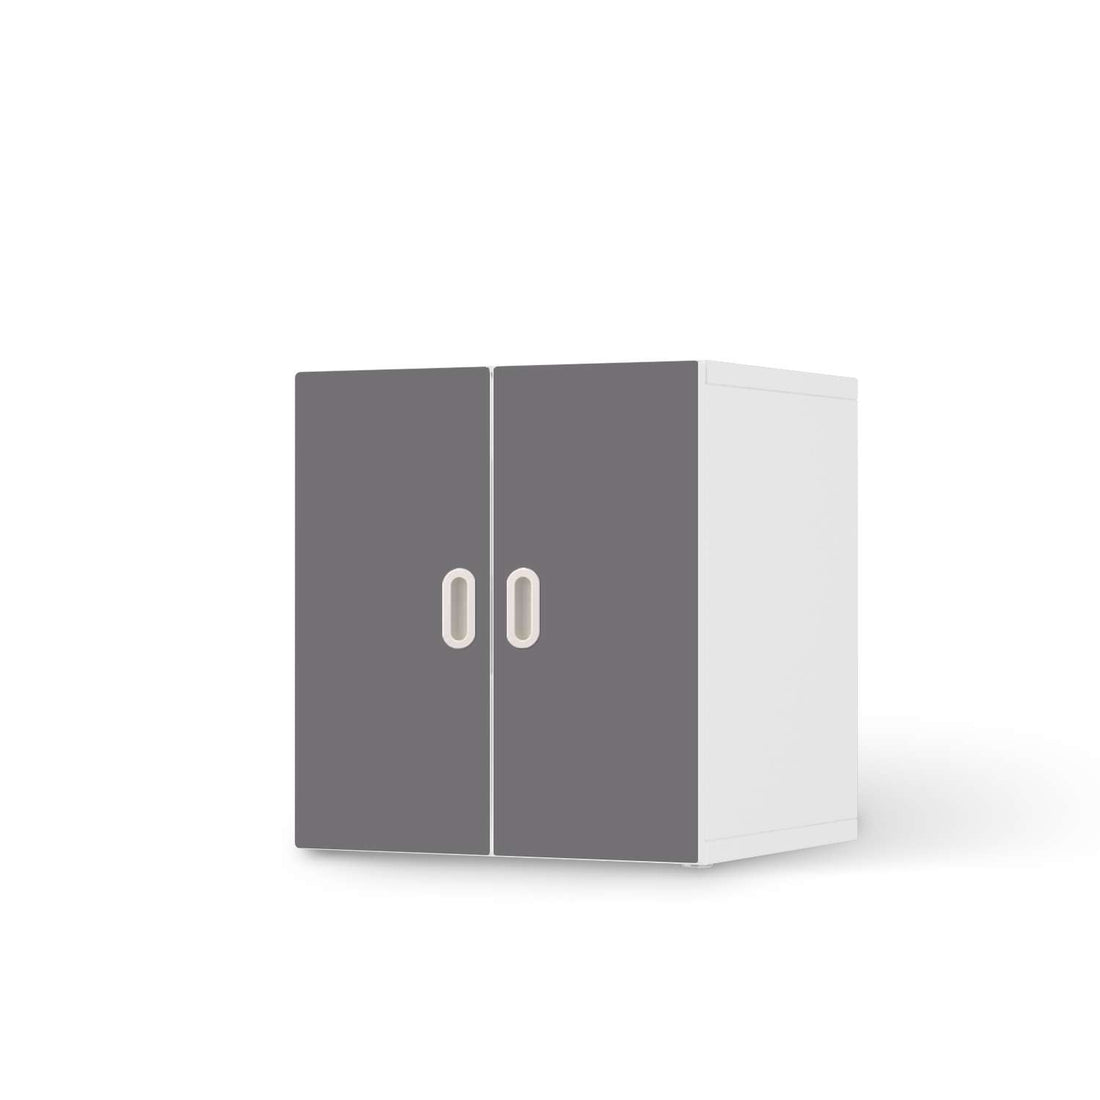 Selbstklebende Folie Grau Light - IKEA Stuva / Fritids Schrank - 2 kleine Türen  - weiss